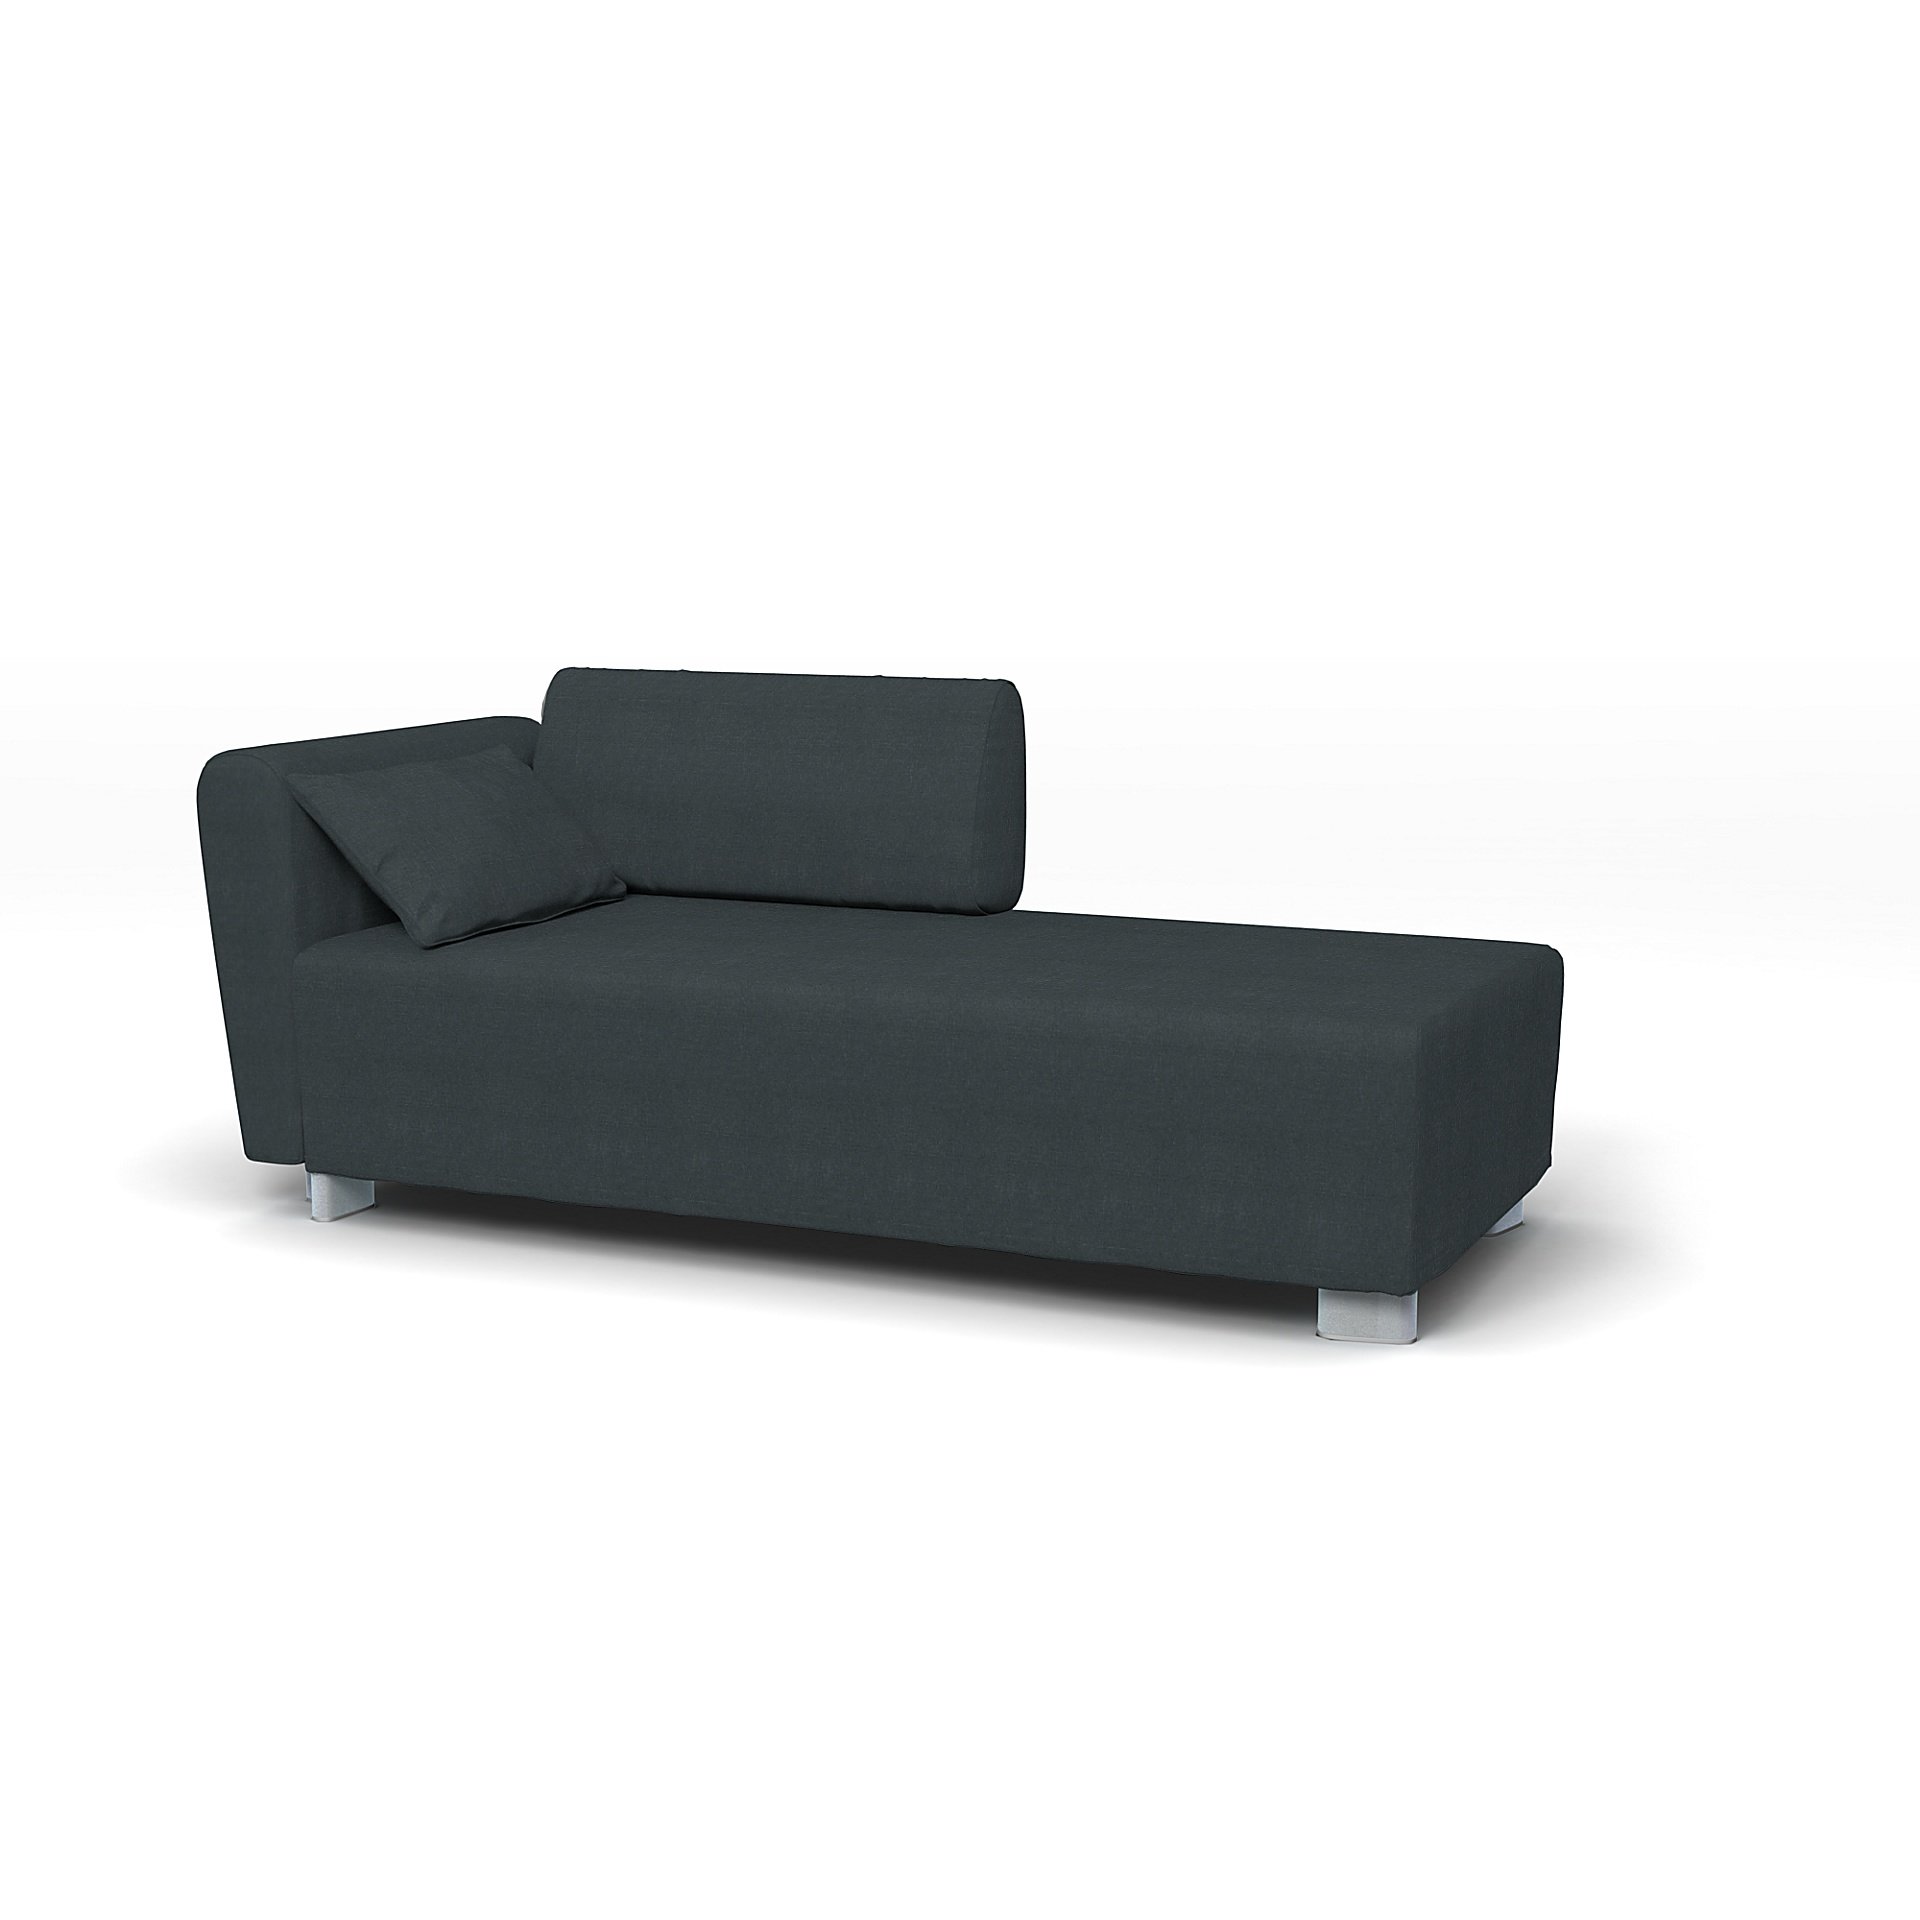 IKEA - Mysinge Chaise Longue with Armrest Cover, Graphite Grey, Linen - Bemz